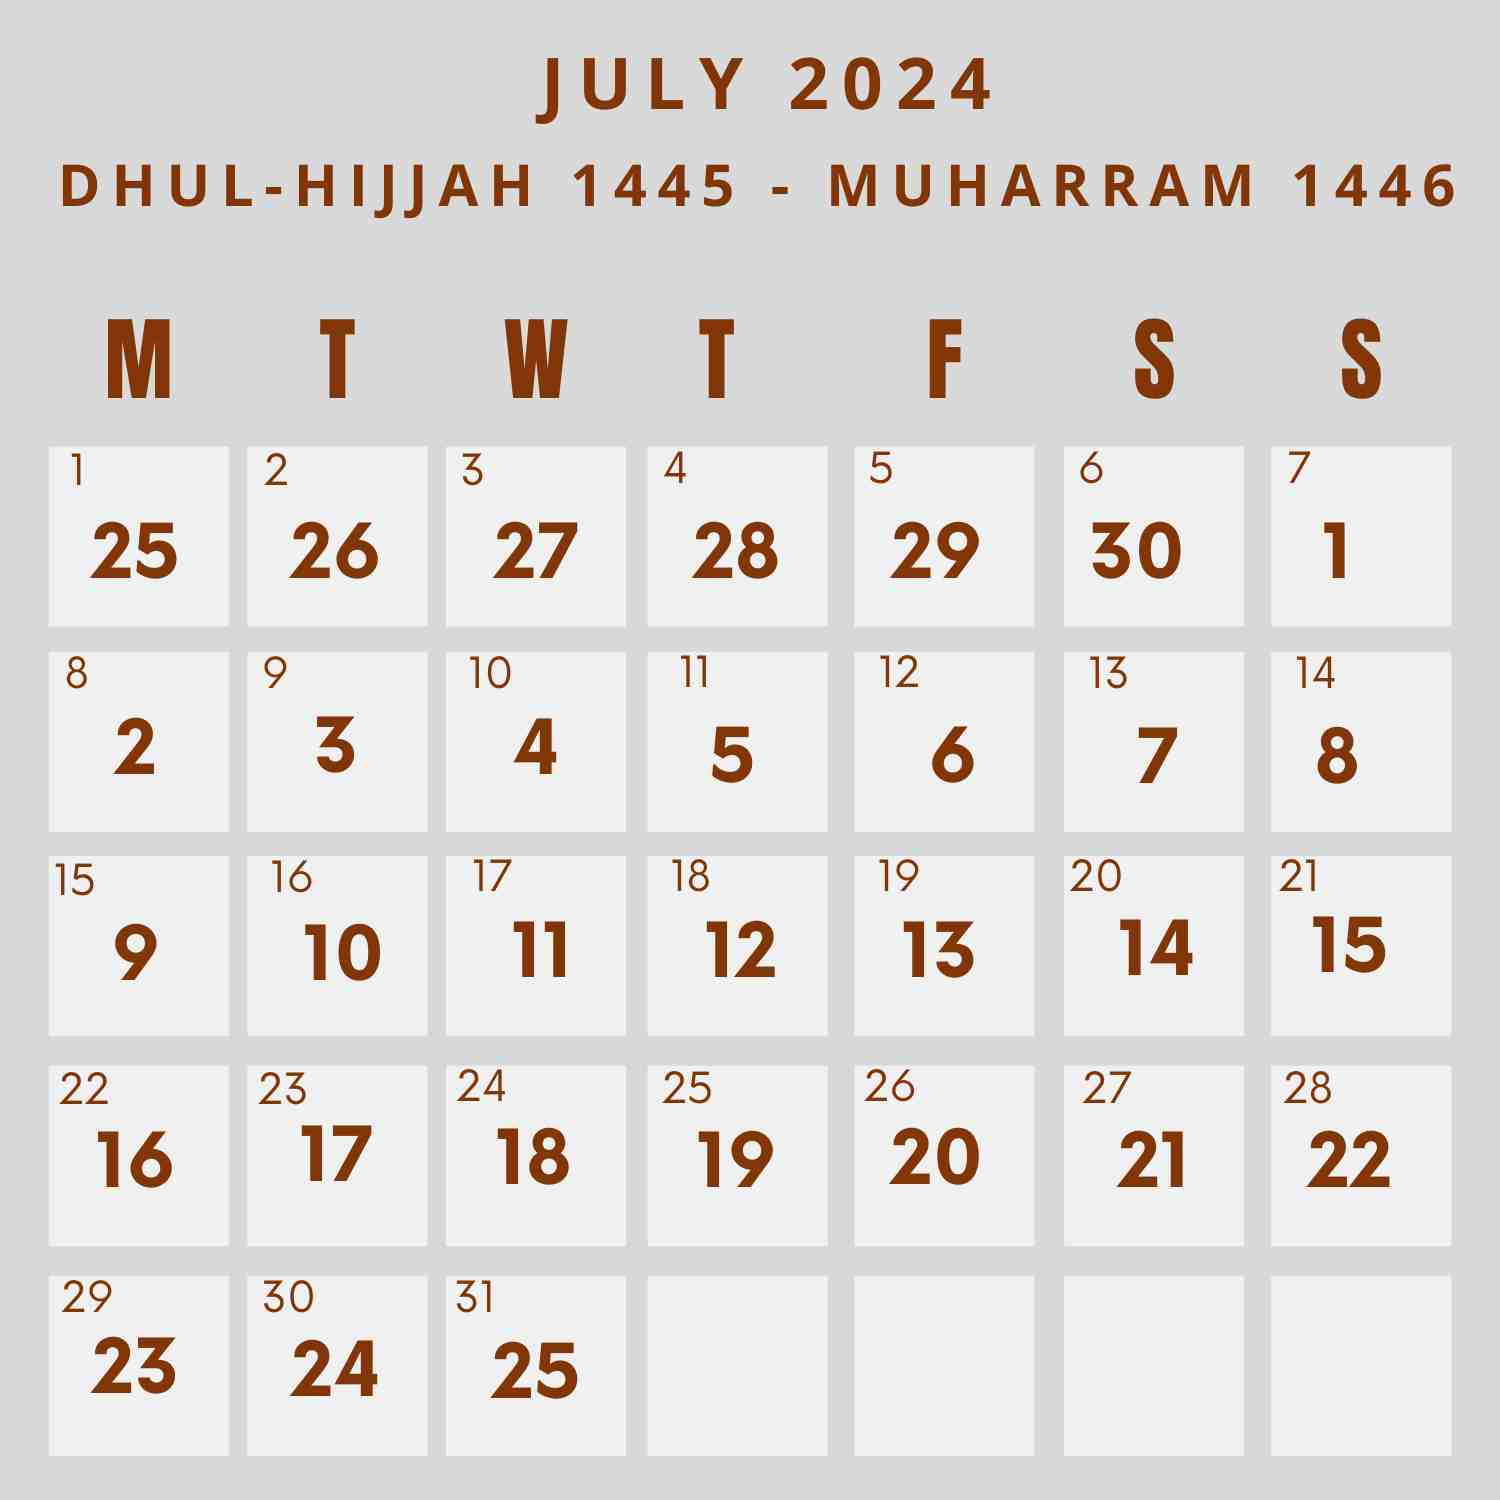 Islamic Calendar 2024 - Khwajadarbar for 22 July 2024 In Islamic Calendar